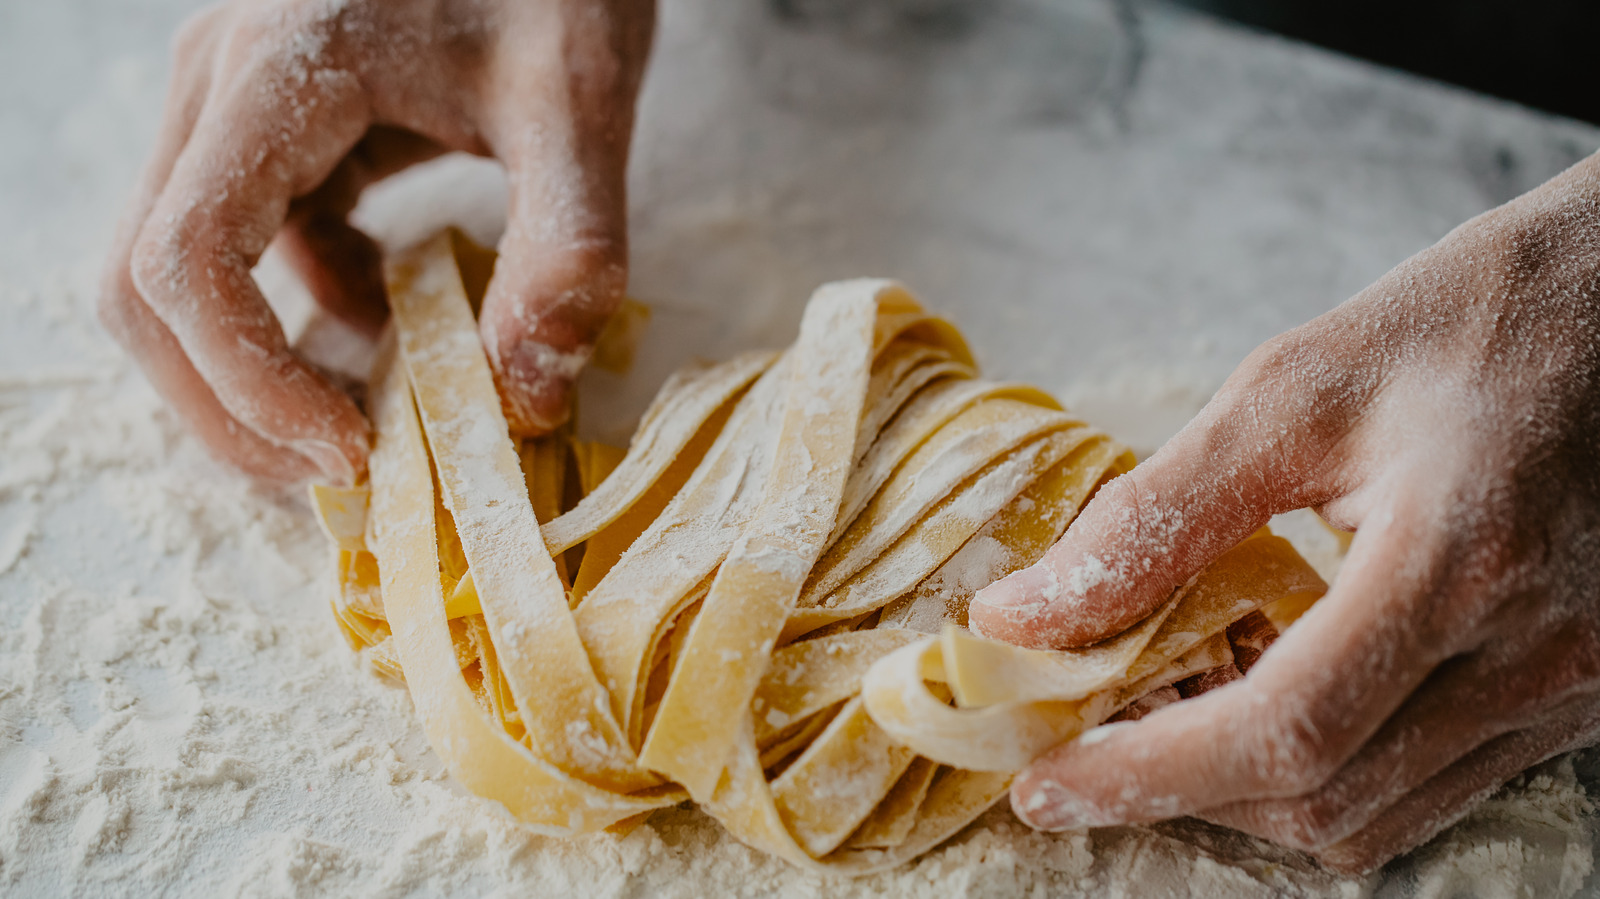 Handmade Pasta Shapes with Pasta Social Club